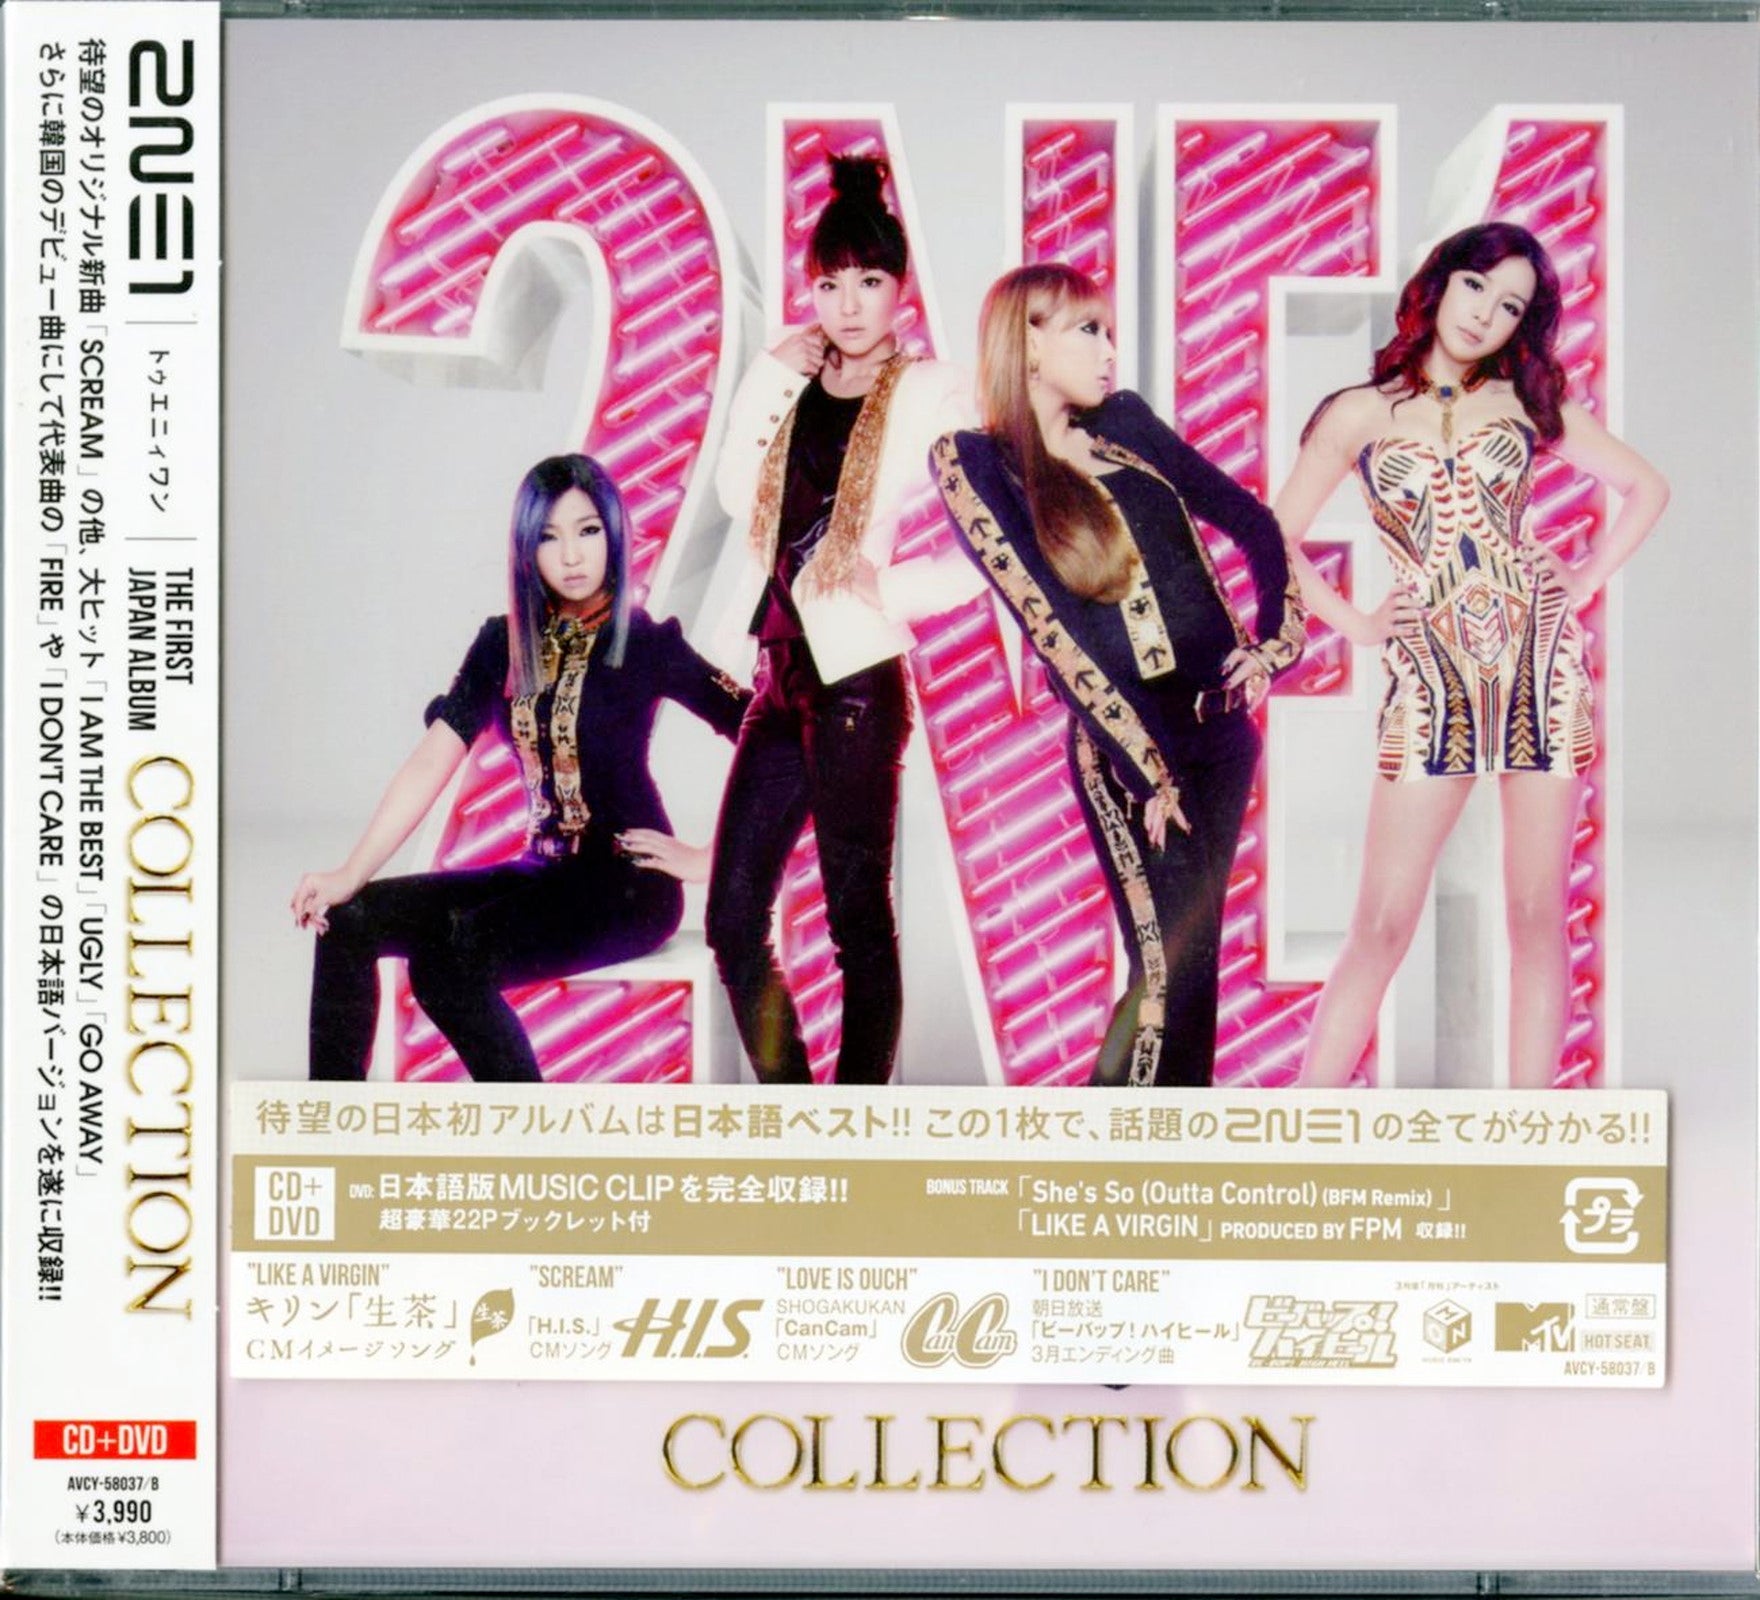 2Ne1 - Collection - Japan CD+DVD+Book – CDs Vinyl Japan Store